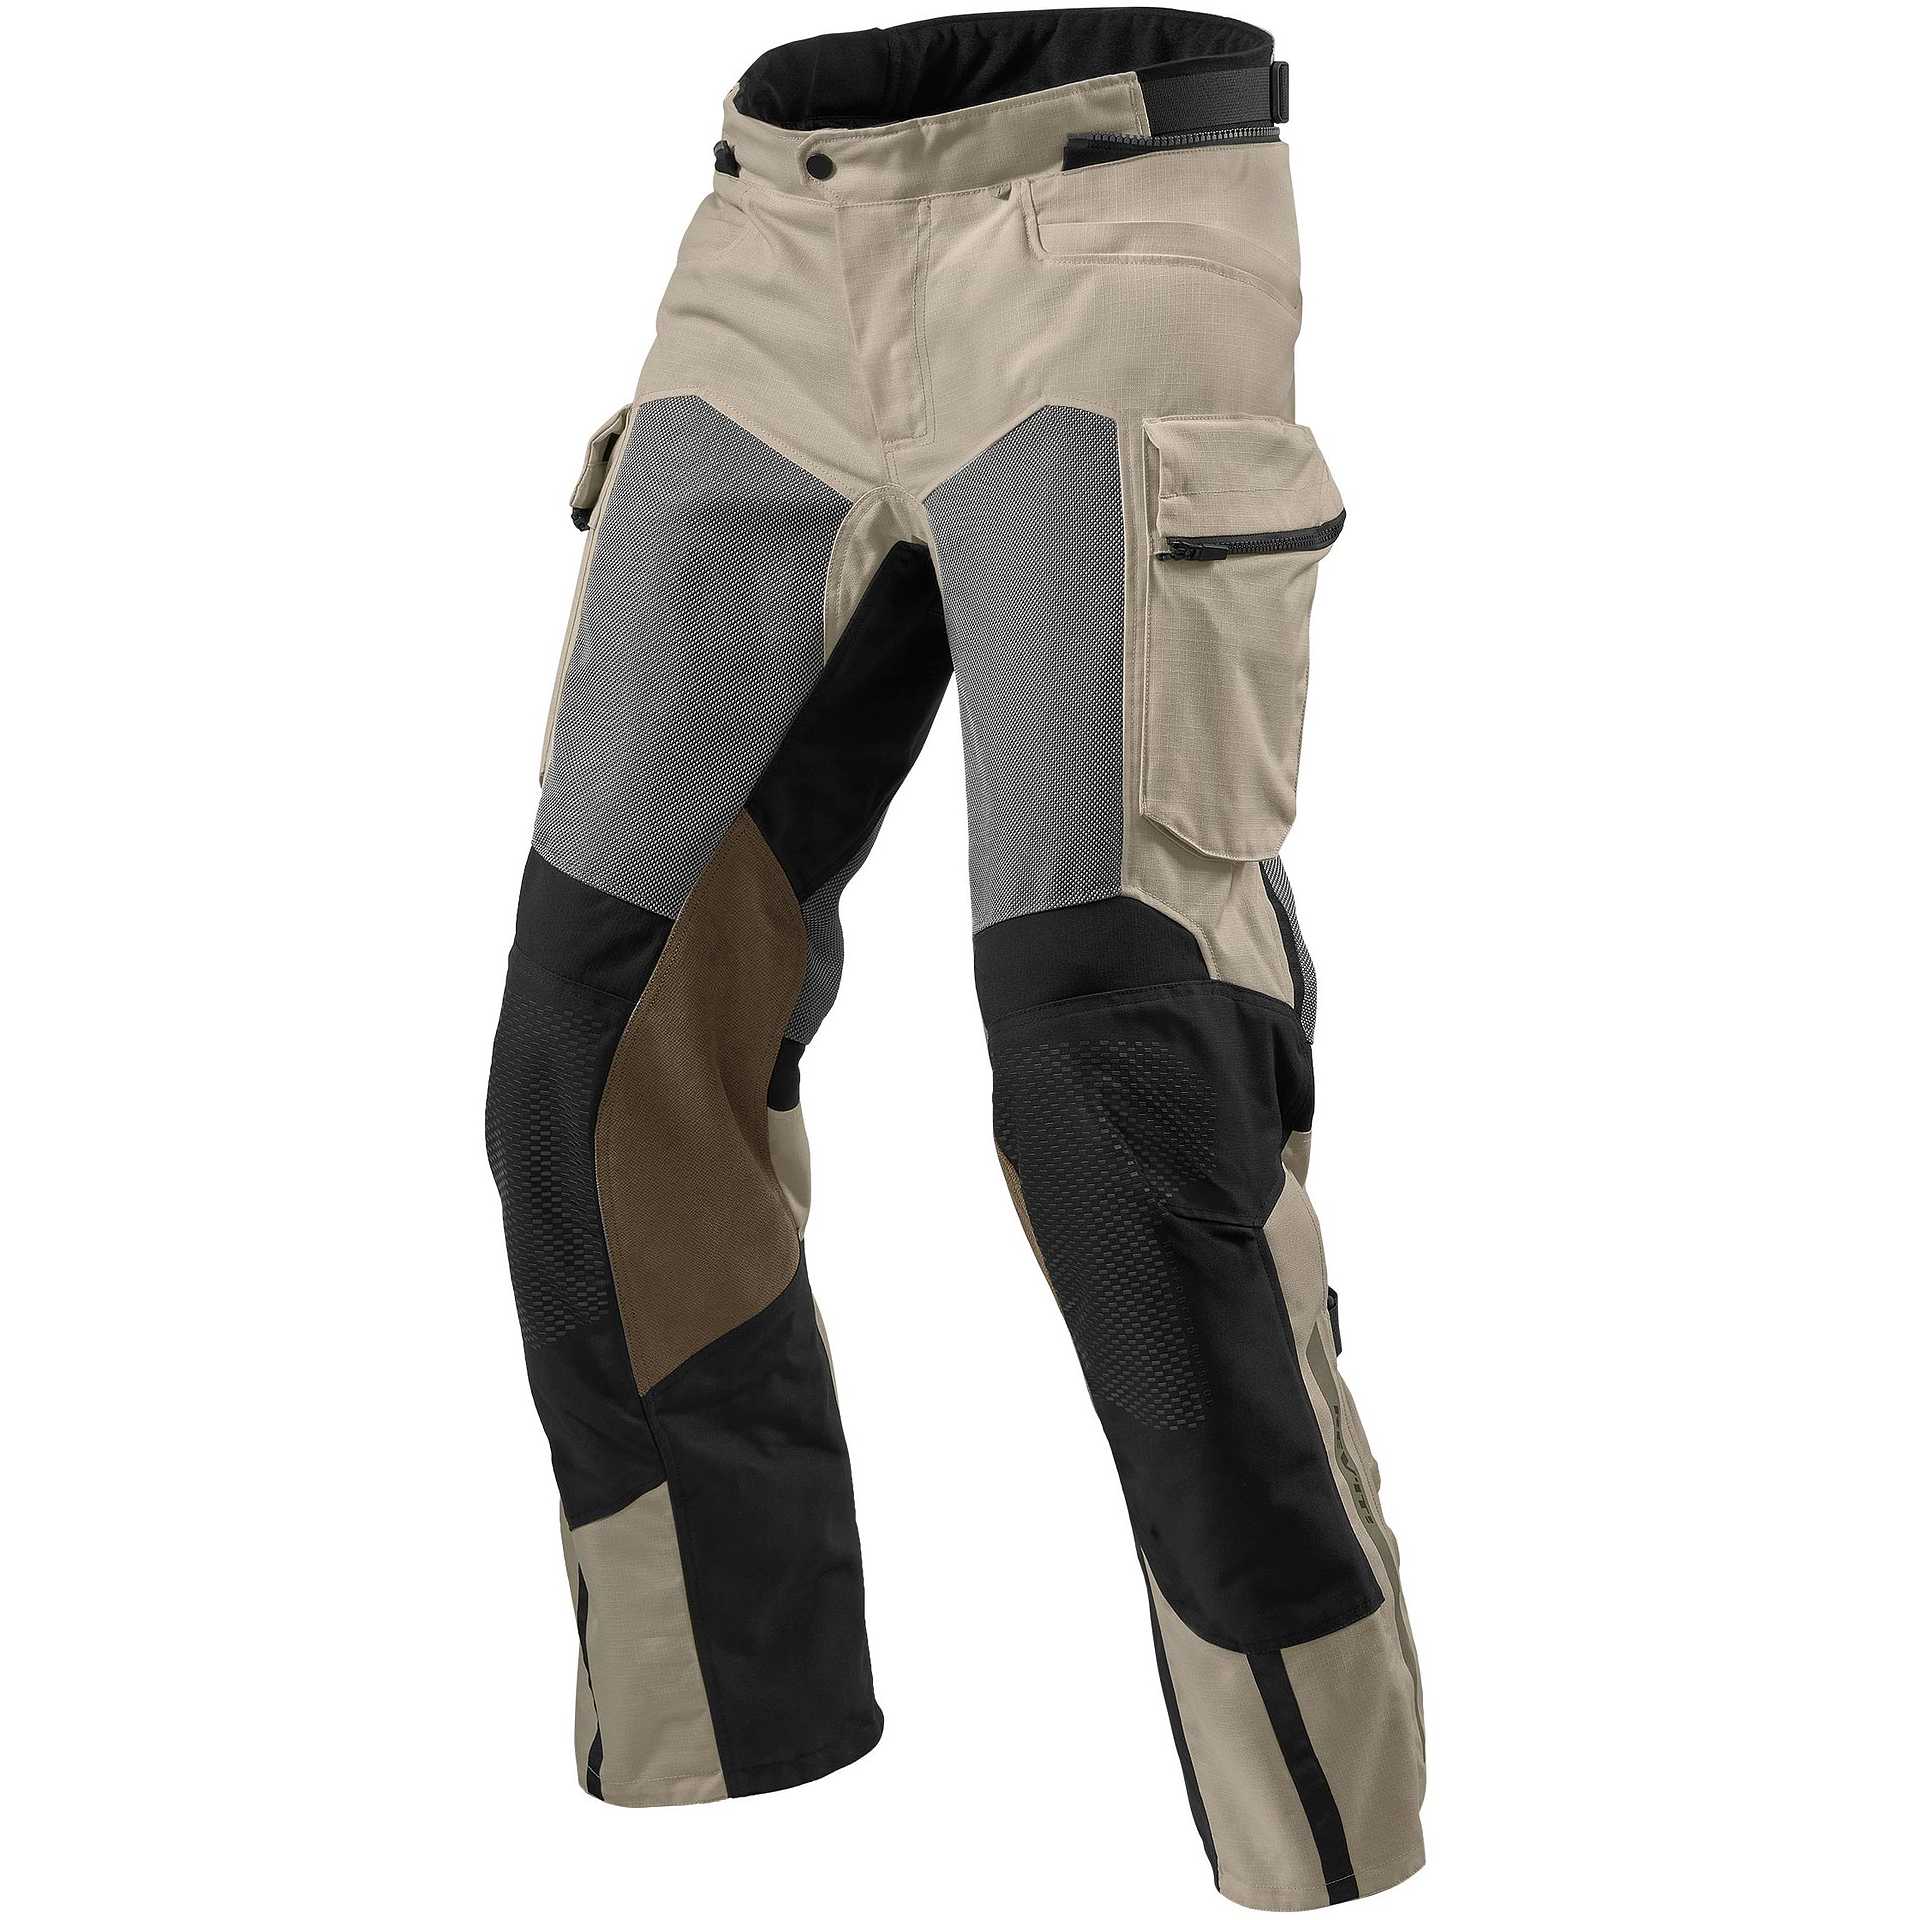 Review Riding Culture Cargo Pants - Cruizador Product Reviews